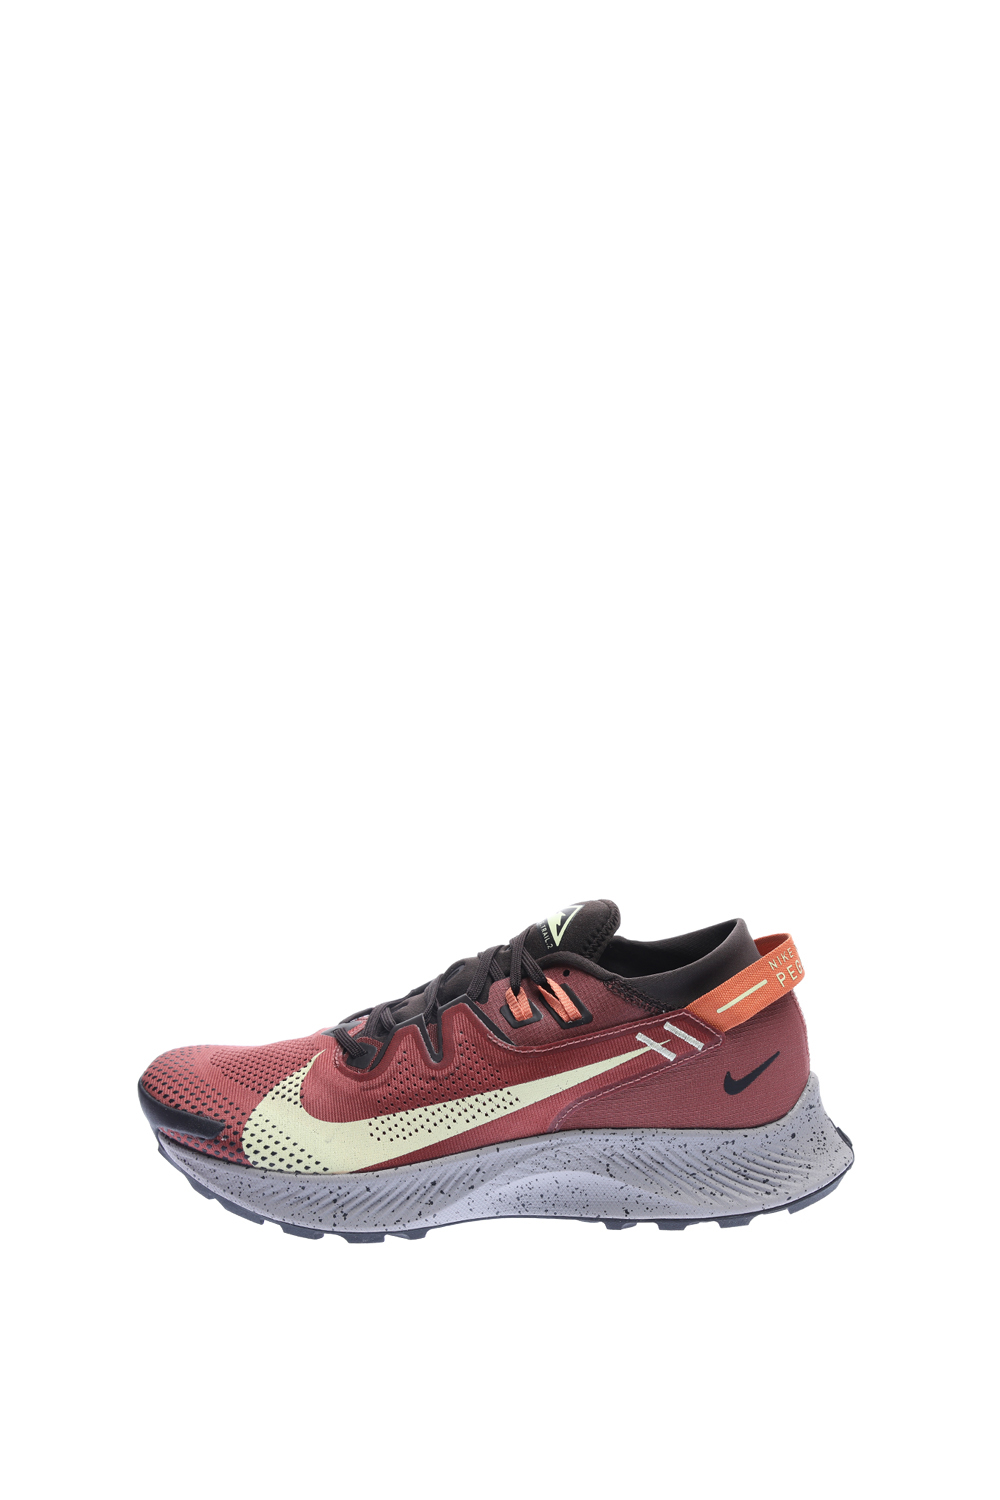 NIKE - Ανδρικά παπούτσια running NIKE PEGASUS TRAIL 2 κόκκινα Ανδρικά/Παπούτσια/Αθλητικά/Running